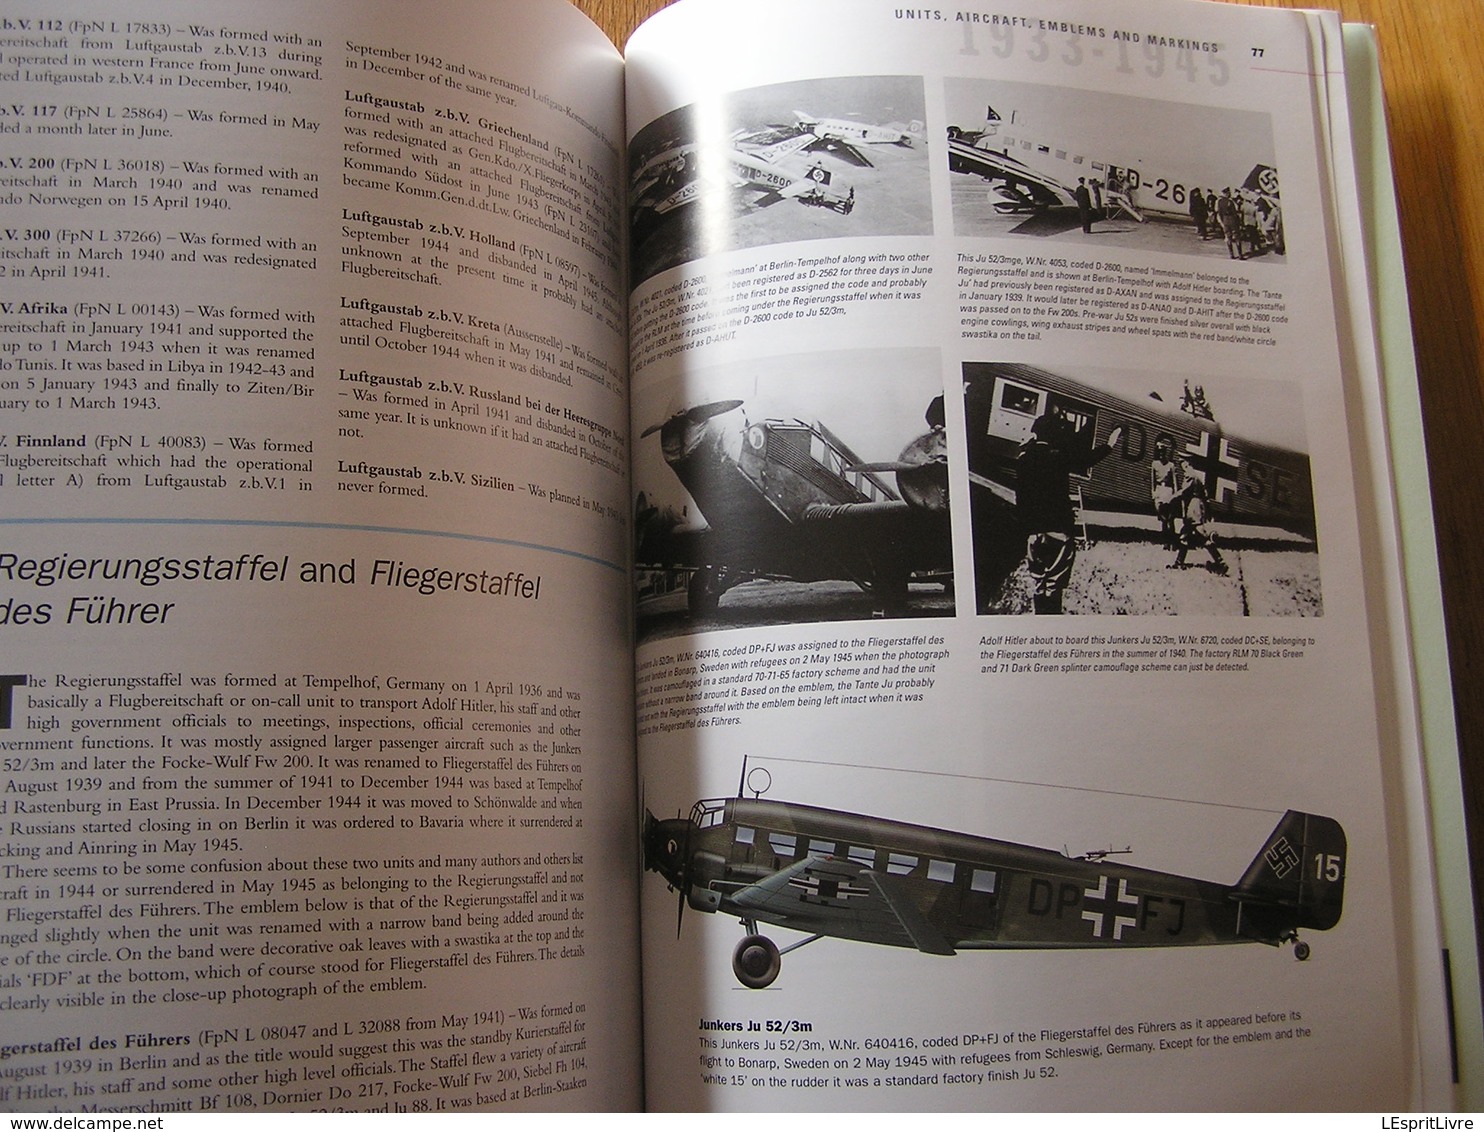 LUFTWAFFE SUPPORT UNITS Aircraft Emblems and Markings 1933 1945 Guerre 40 45 Aviation Allemande Avion Storch JU 52 FW200